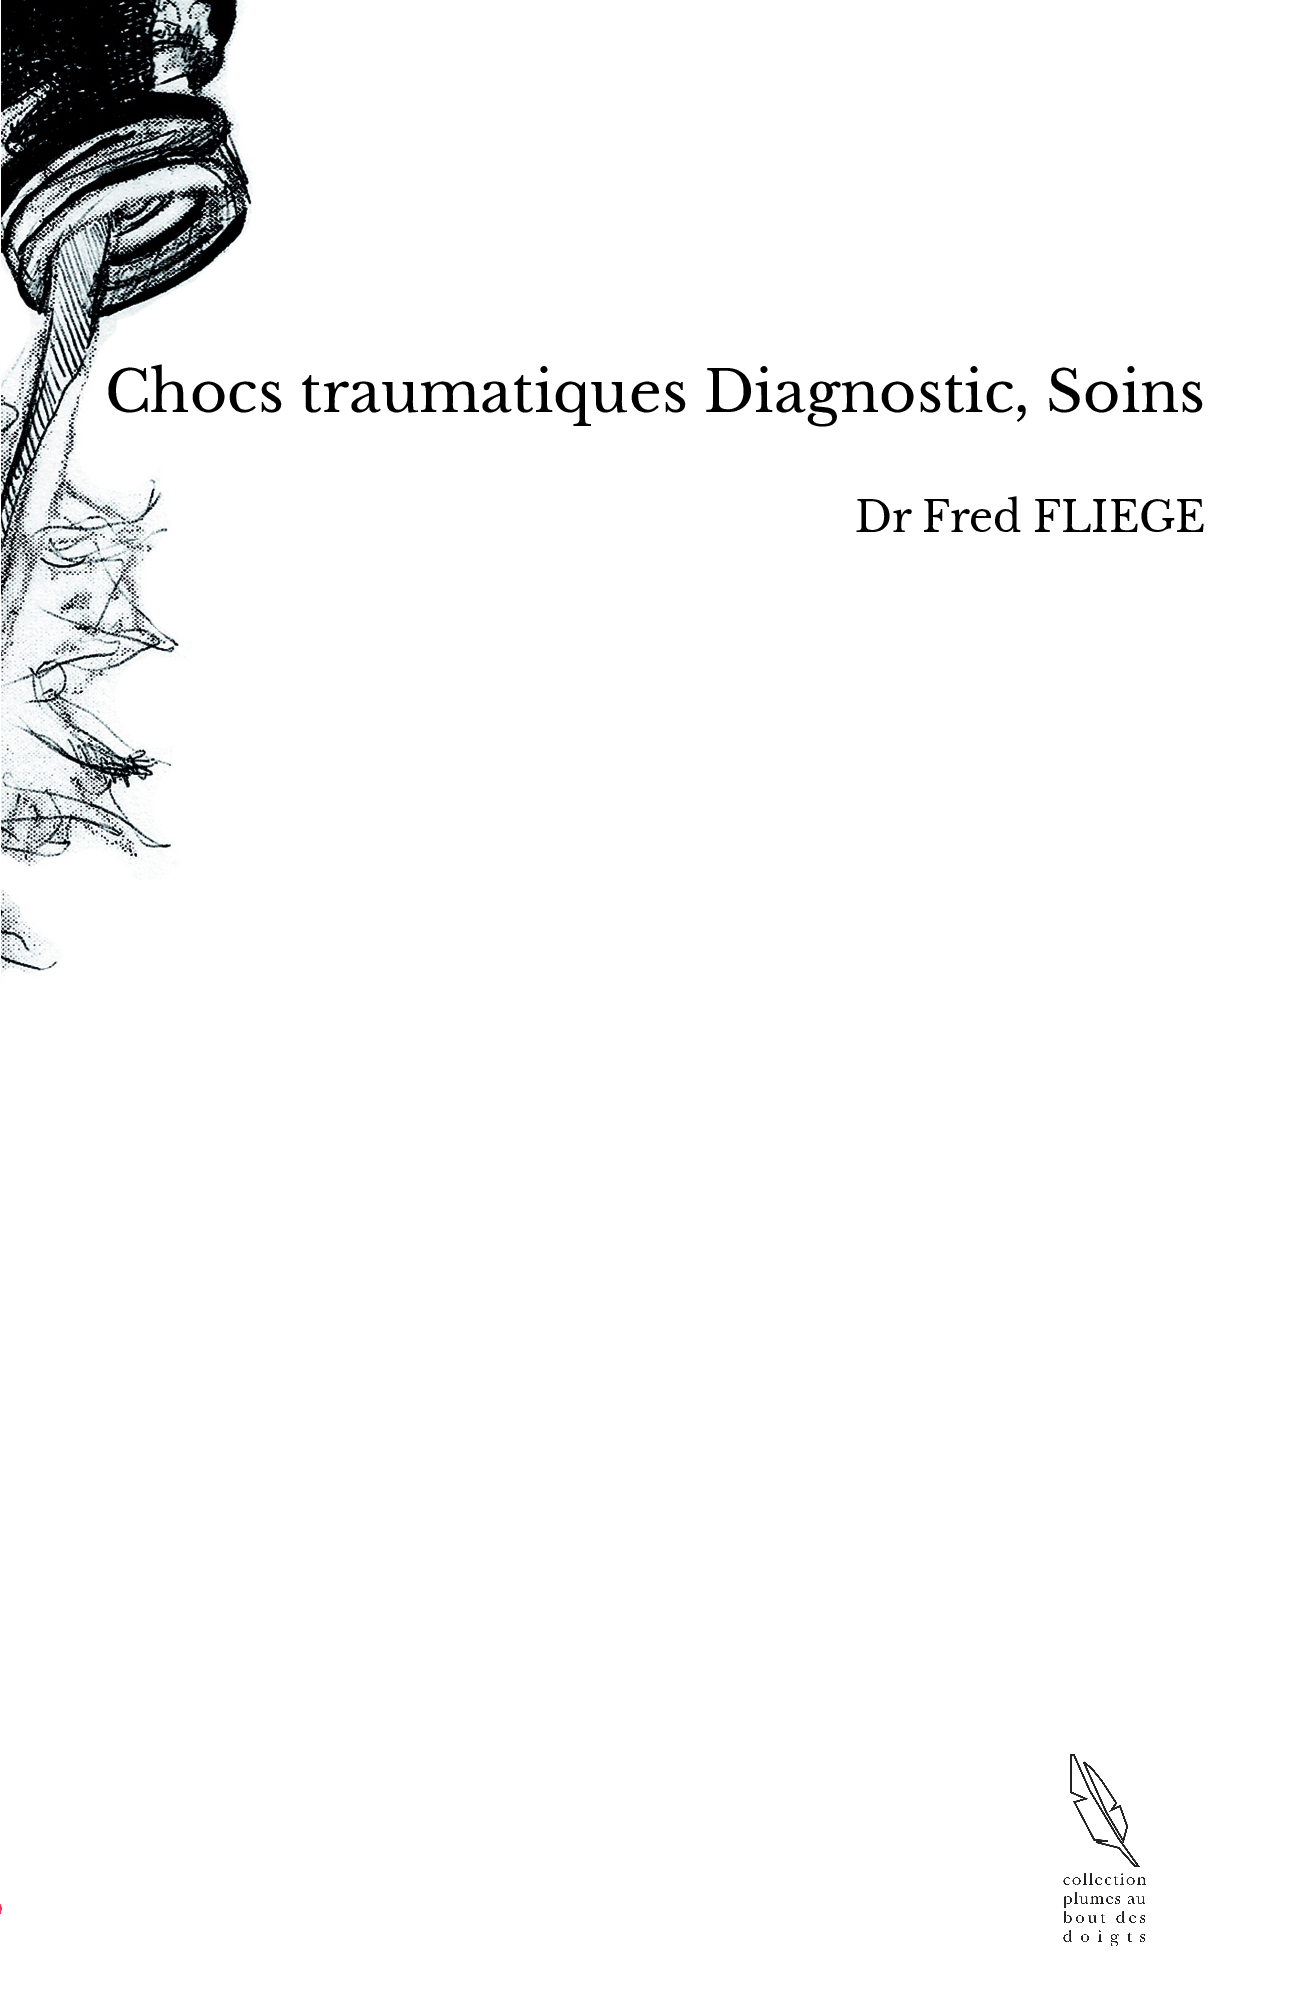 Chocs traumatiques Diagnostic, Soins